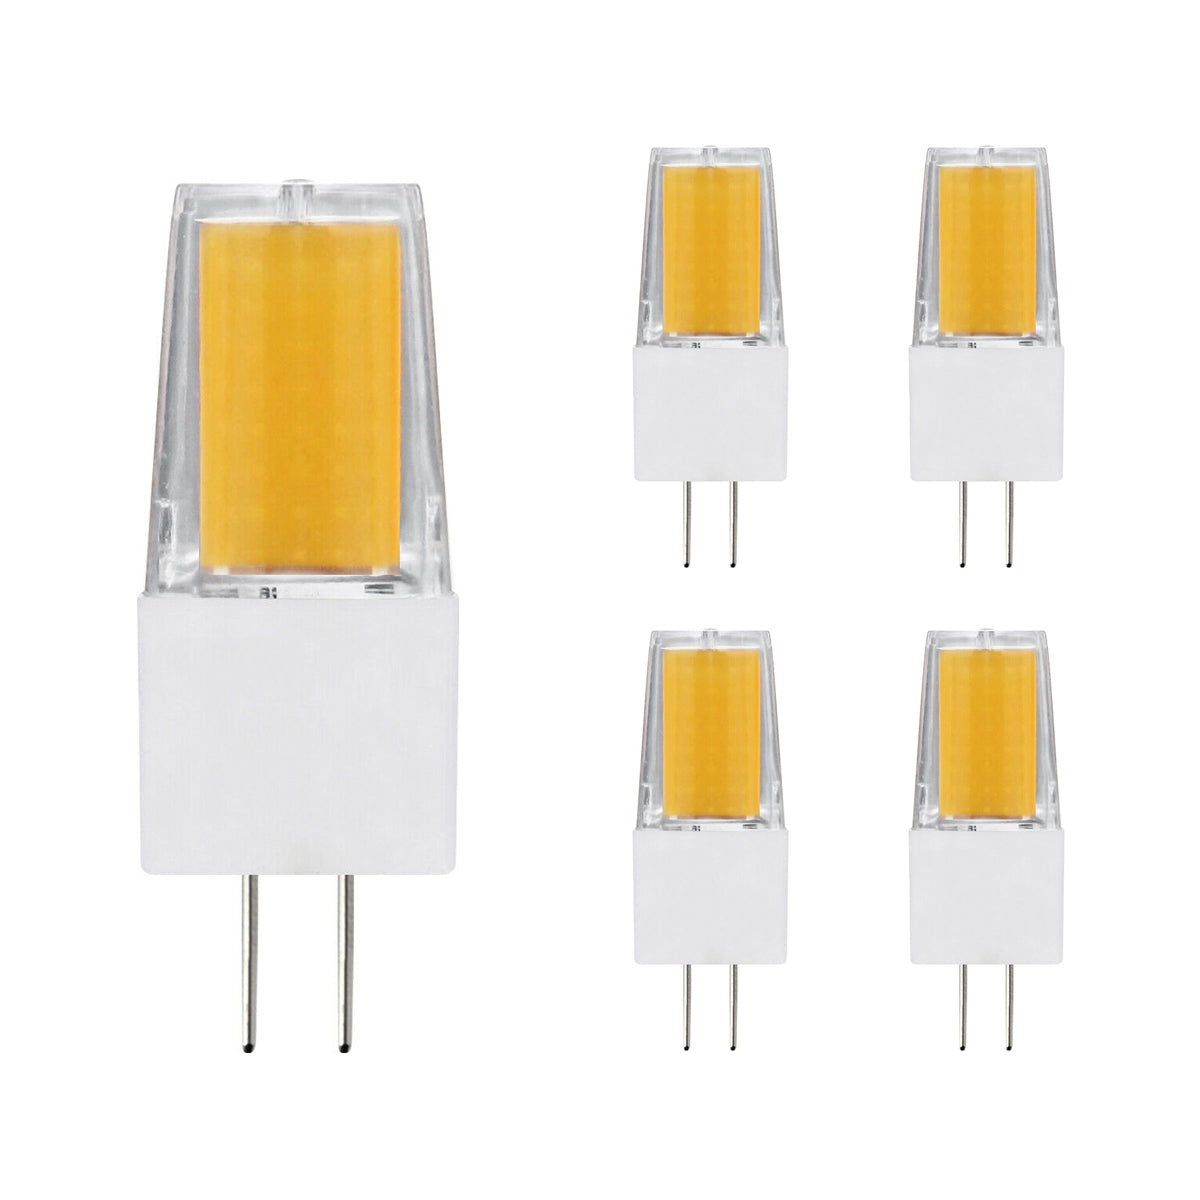 G.W.S LED Wholesale LED Bulbs G4 / Warm White (3000K) / 5 AC230V 3W G4 LED Capsule Bulb